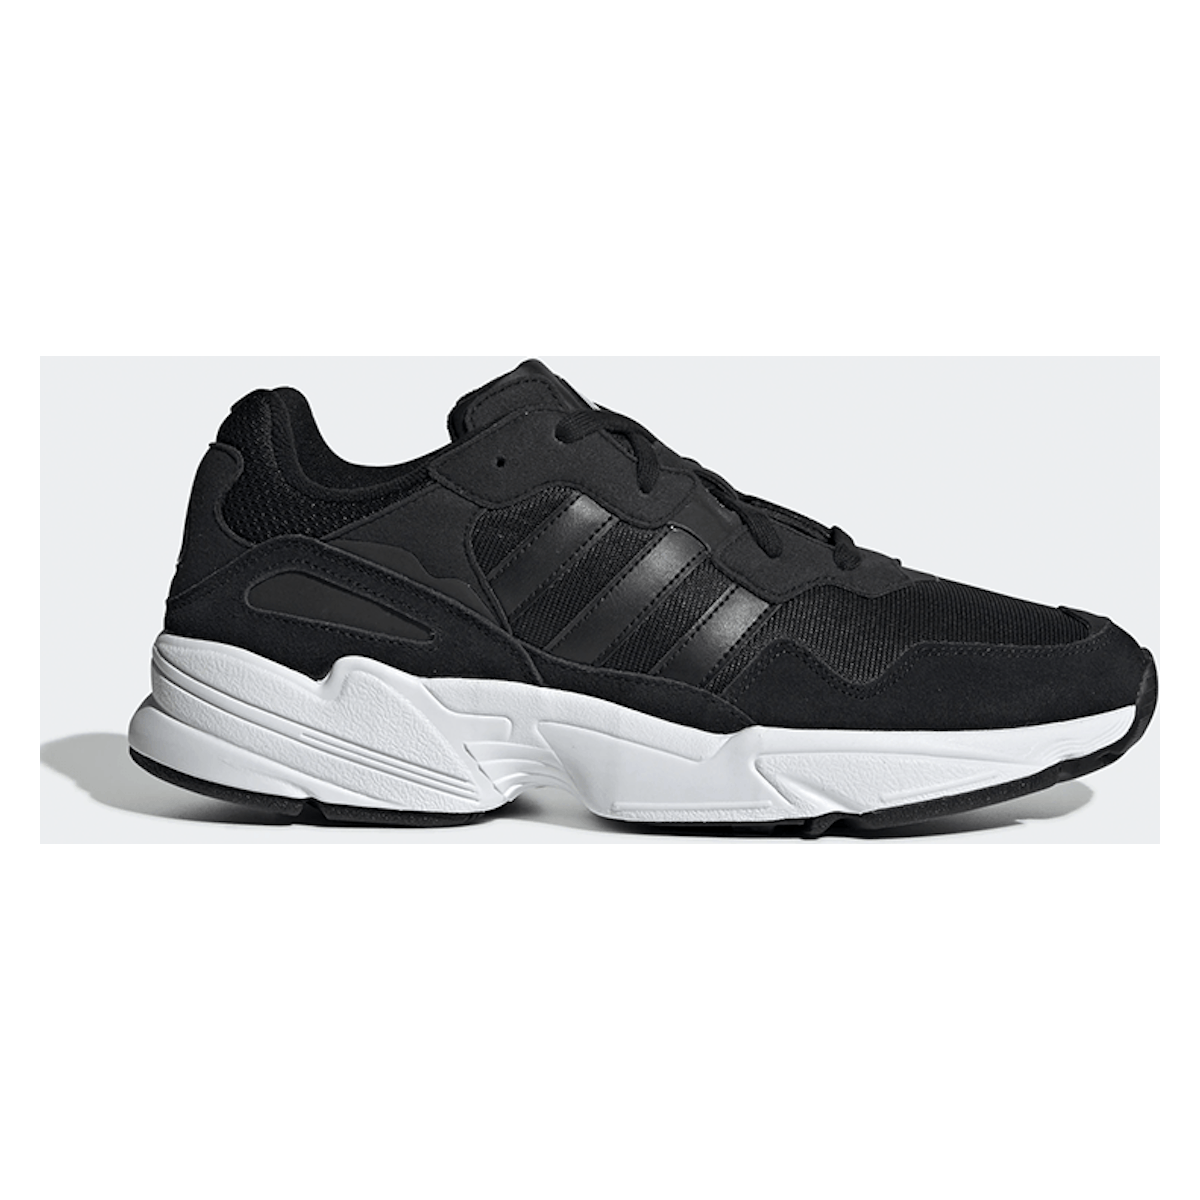 Adidas Yung-96 Black/White